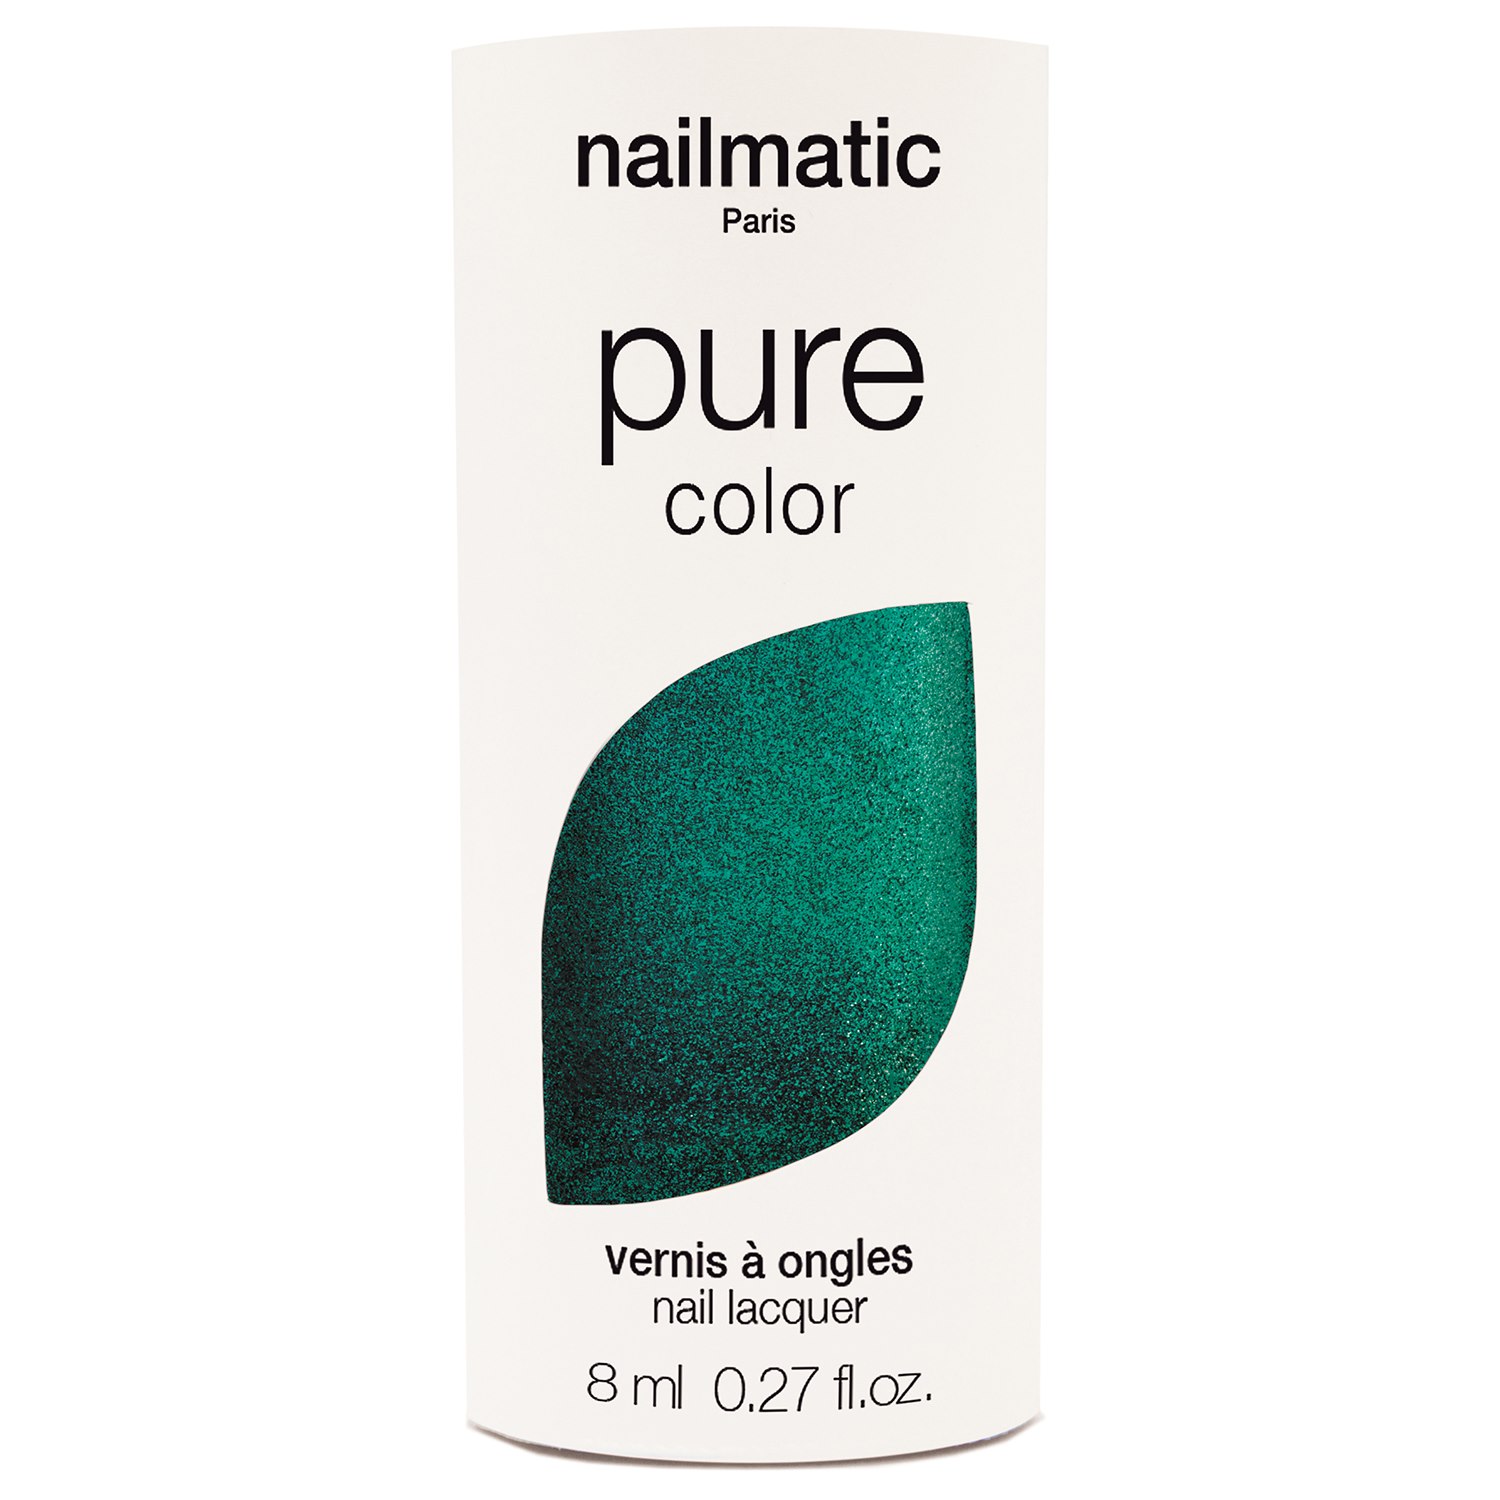 Nailmatic Pure Color Nail Polish 10-free, 8 ml Chelsea - Pearly Emerald